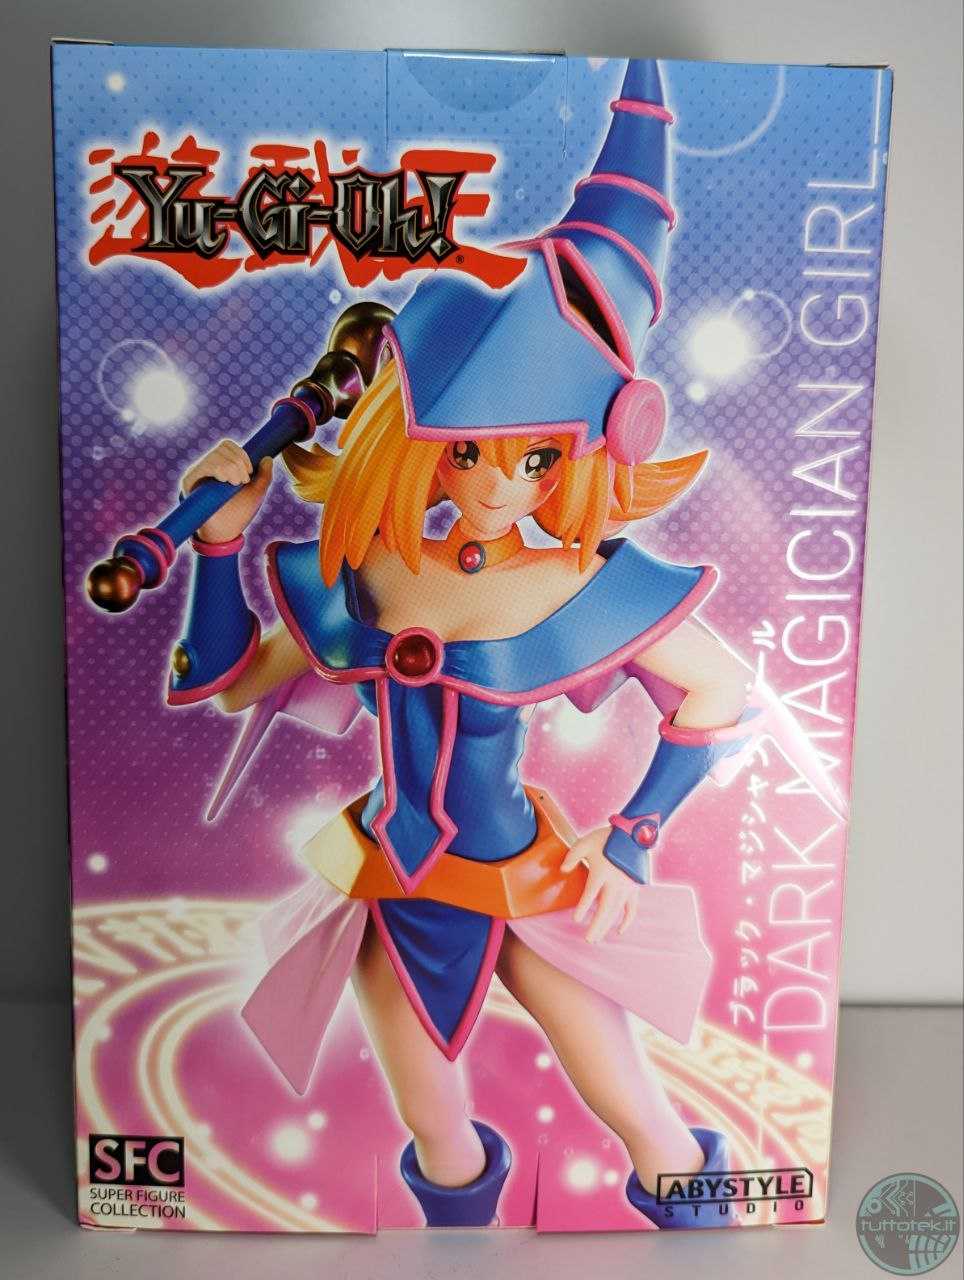 Recensione Yu-Gi-Oh! - Dark Magician Girl Figure